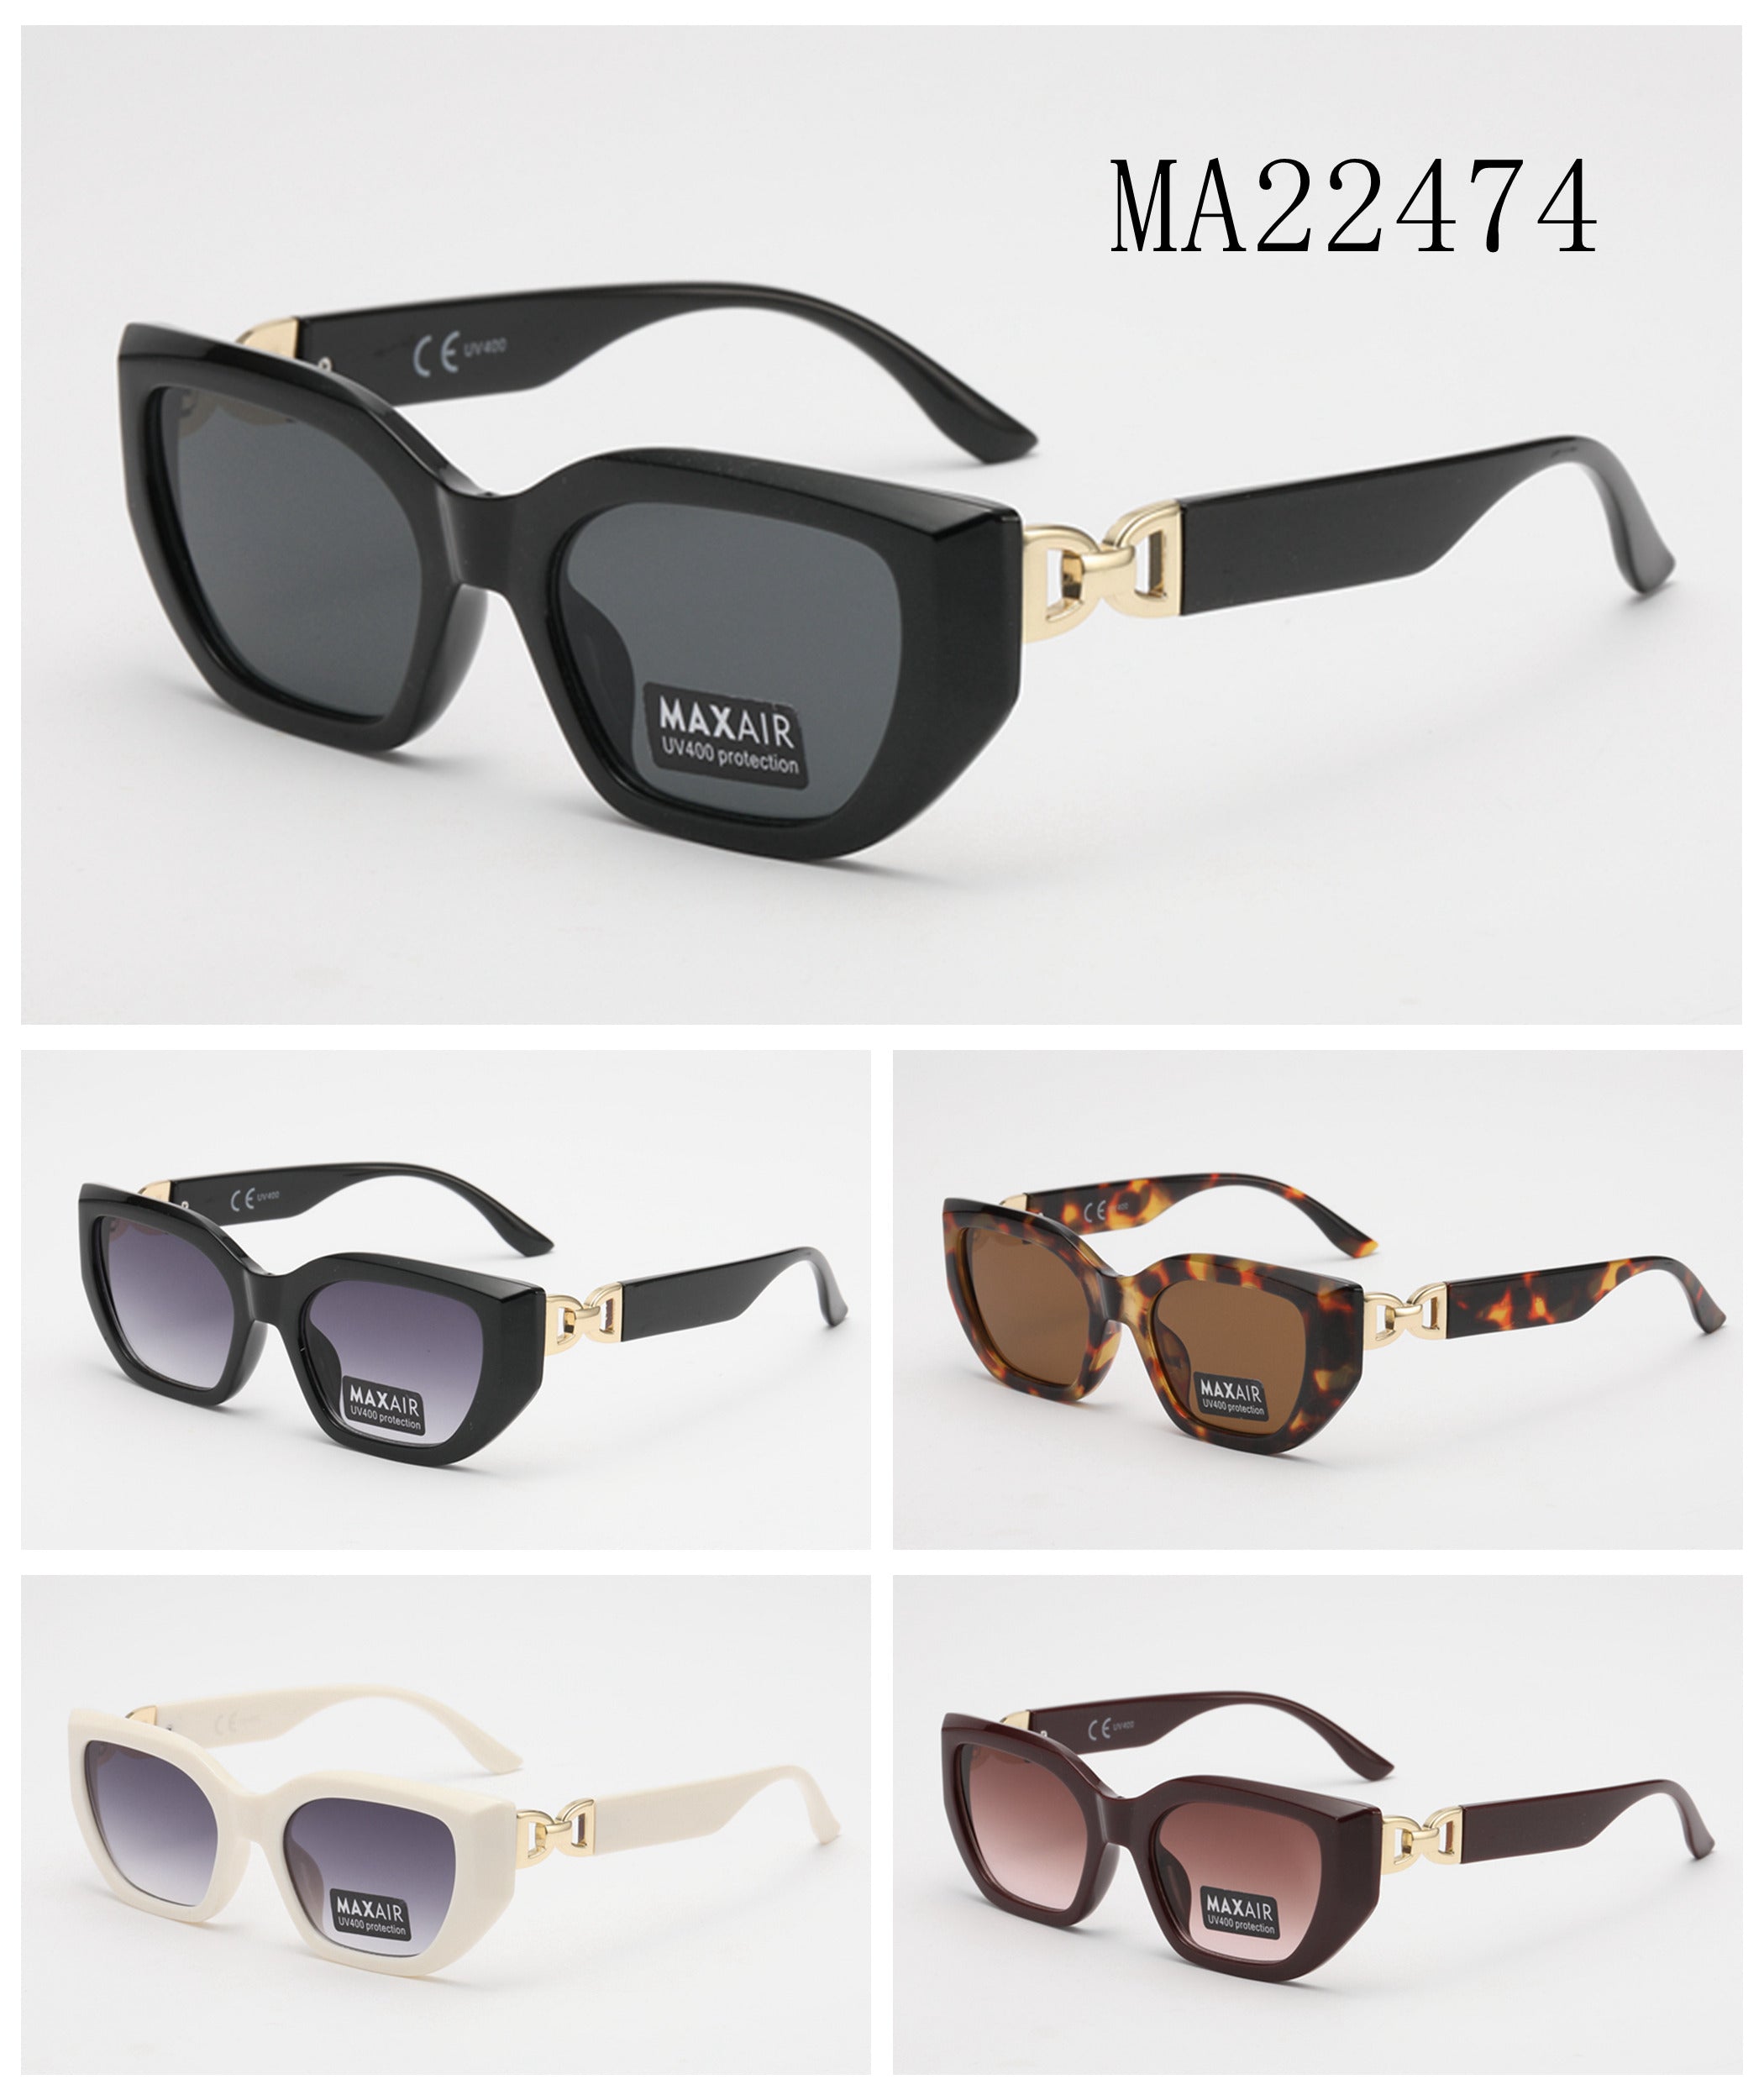 Maxair 22474 Sunglasses